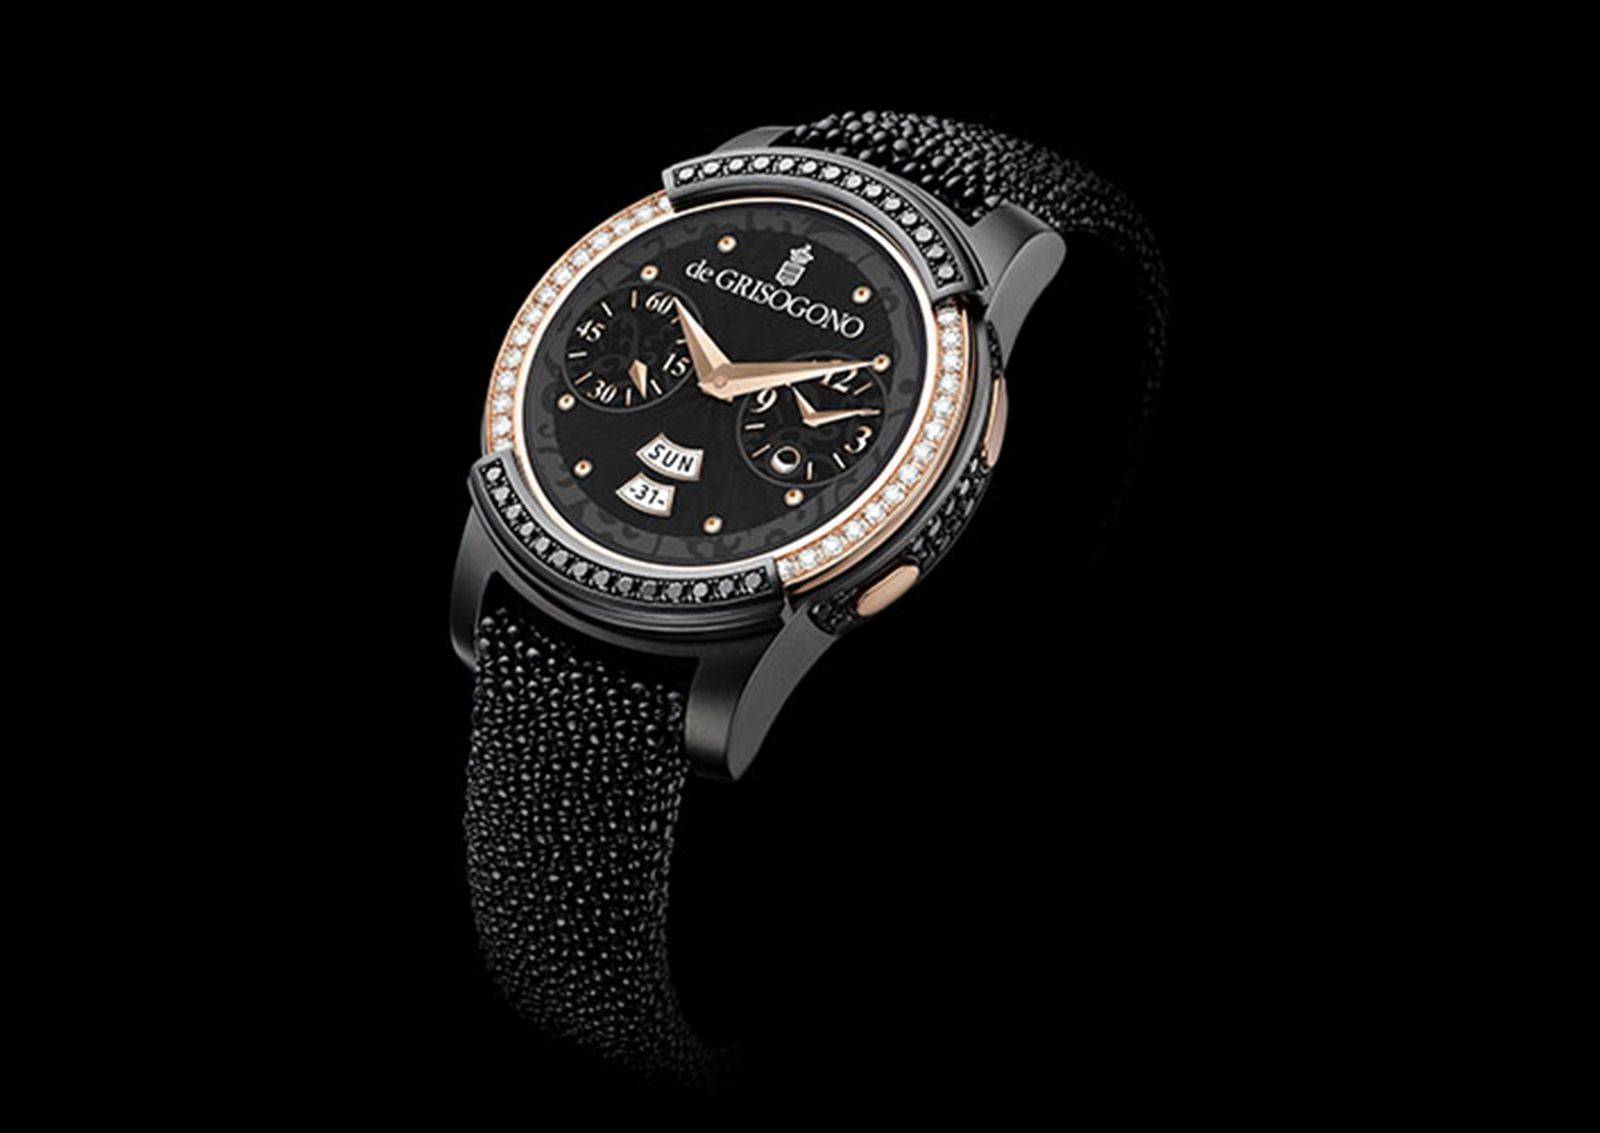 samsung gear s3 smartwatch plans leaked luxury de grisogono version confirmed image 2